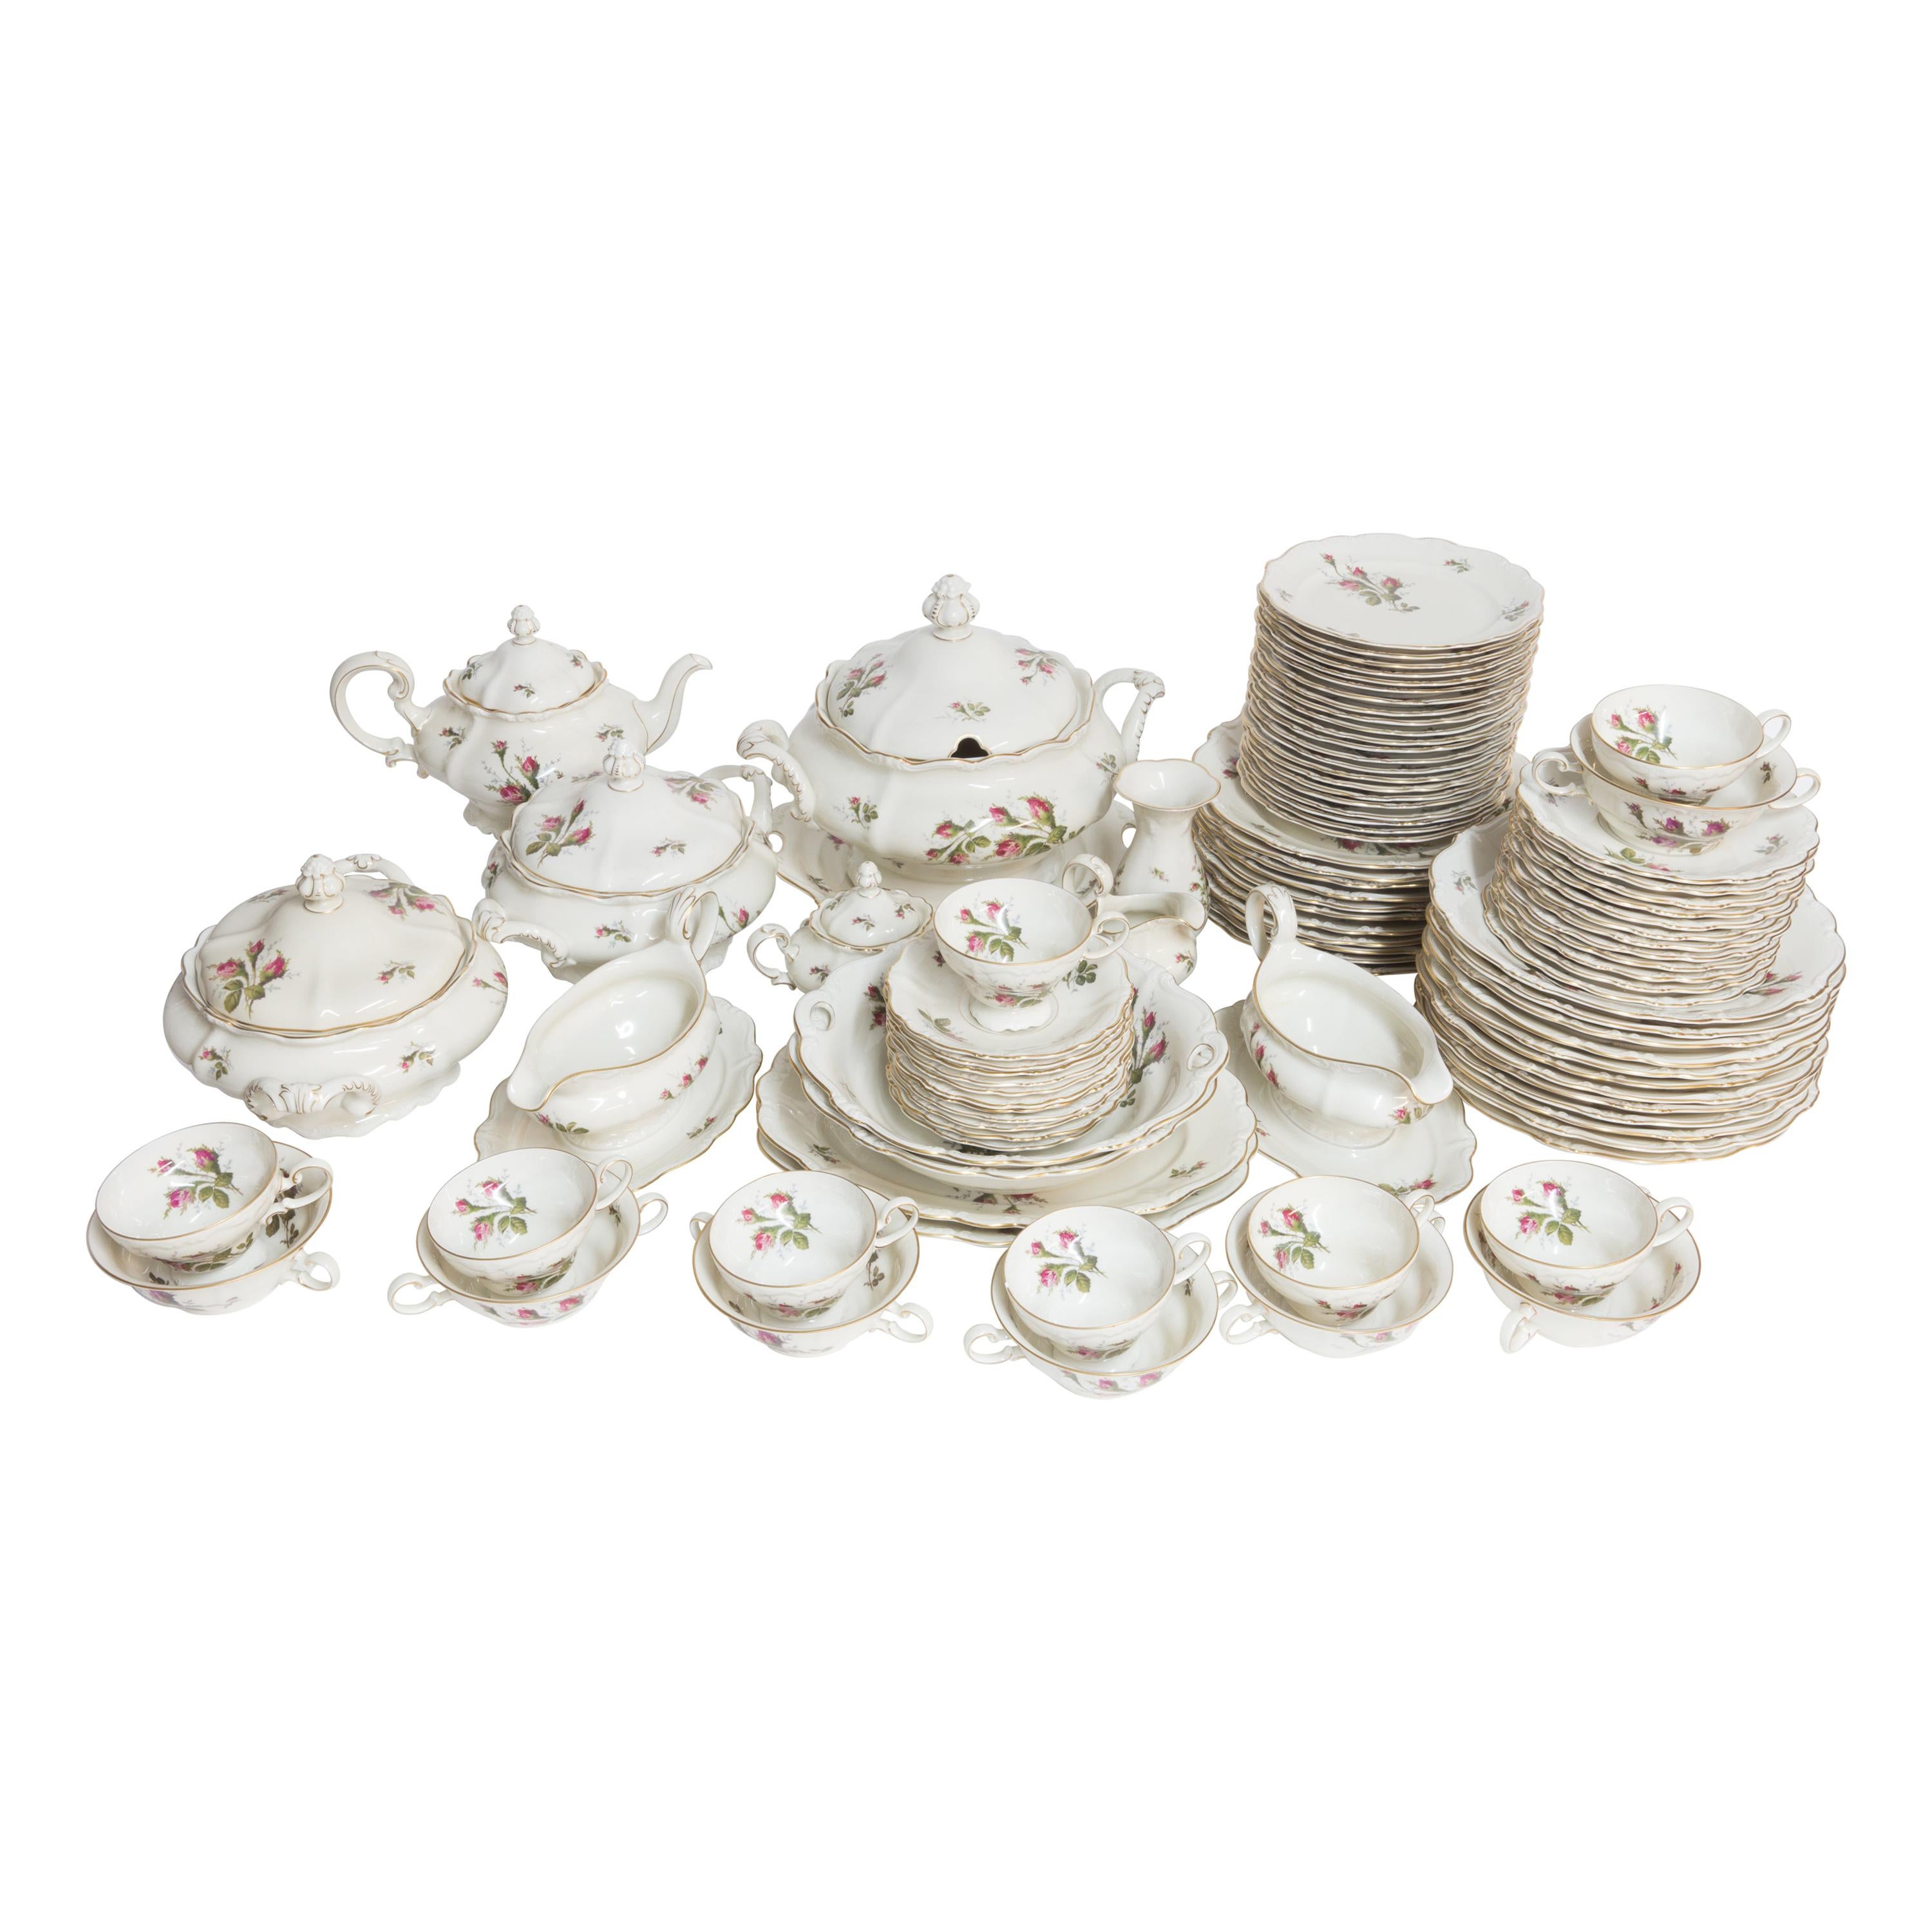 110 Piece Midcentury Rosenthal Pompadour Porcelain Dinner Service Set